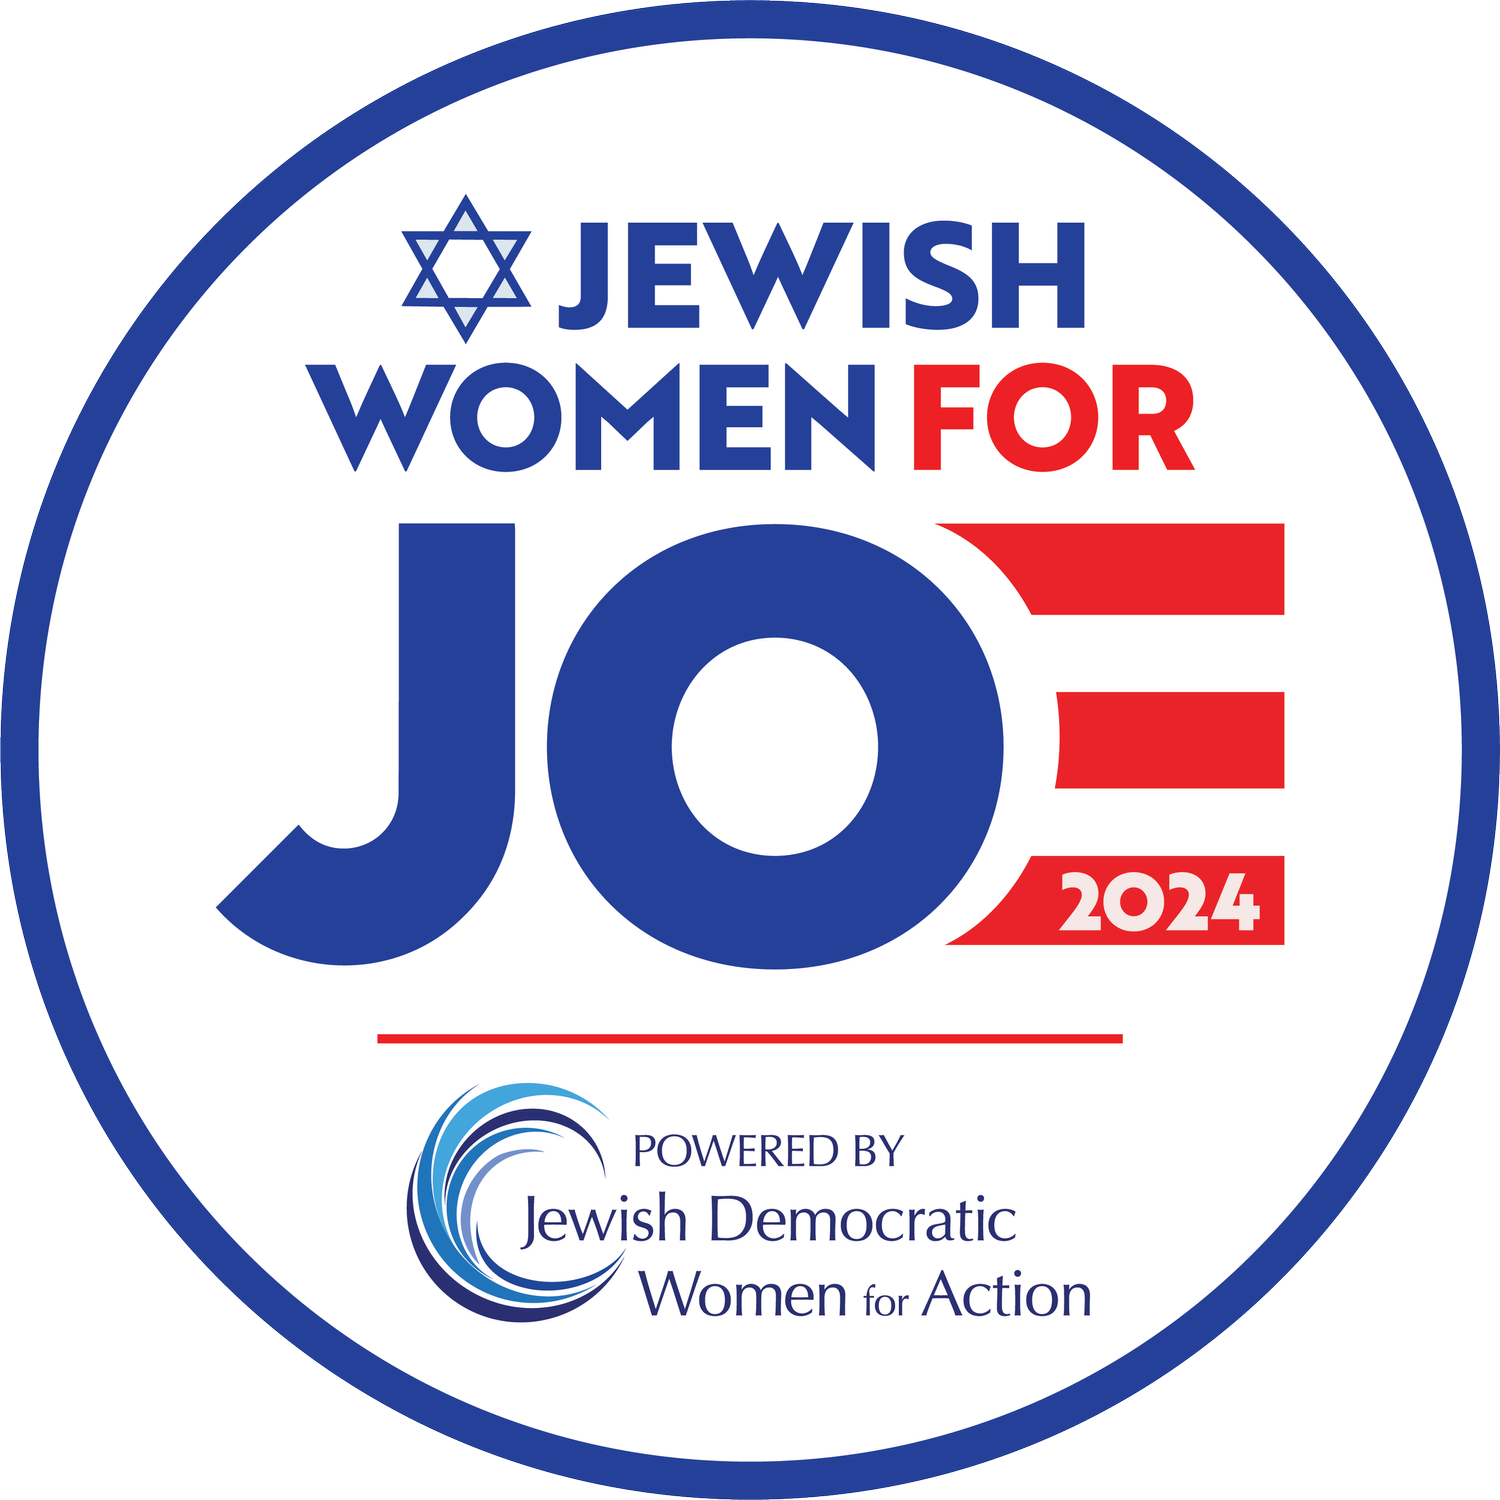 Jewish Women for Joe